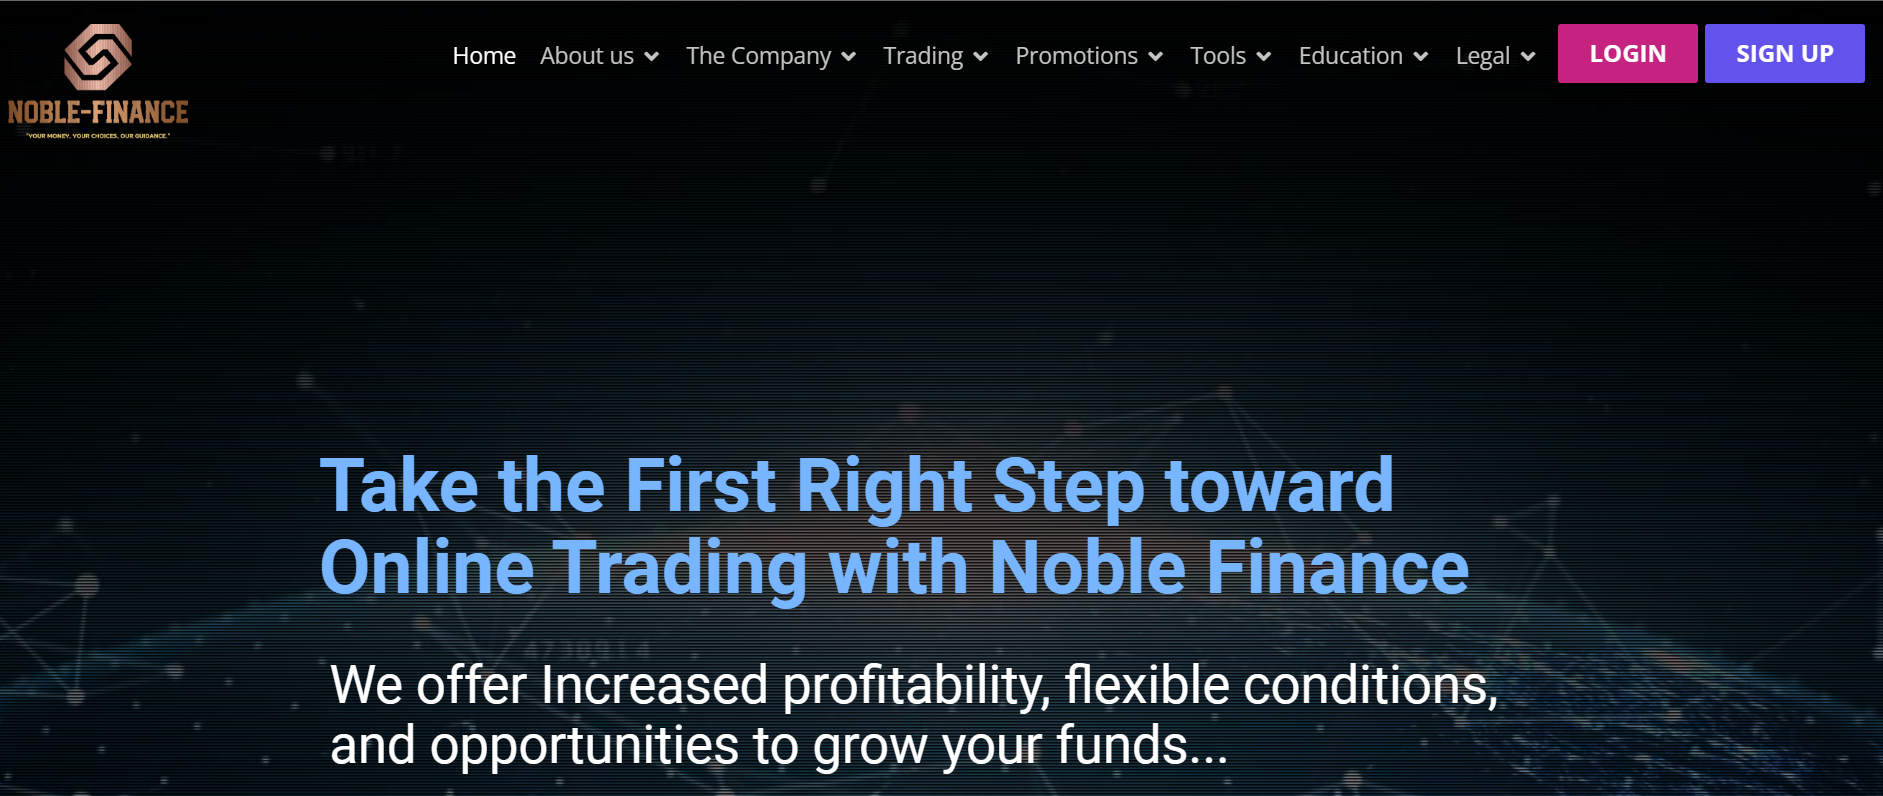 Noble-Finance